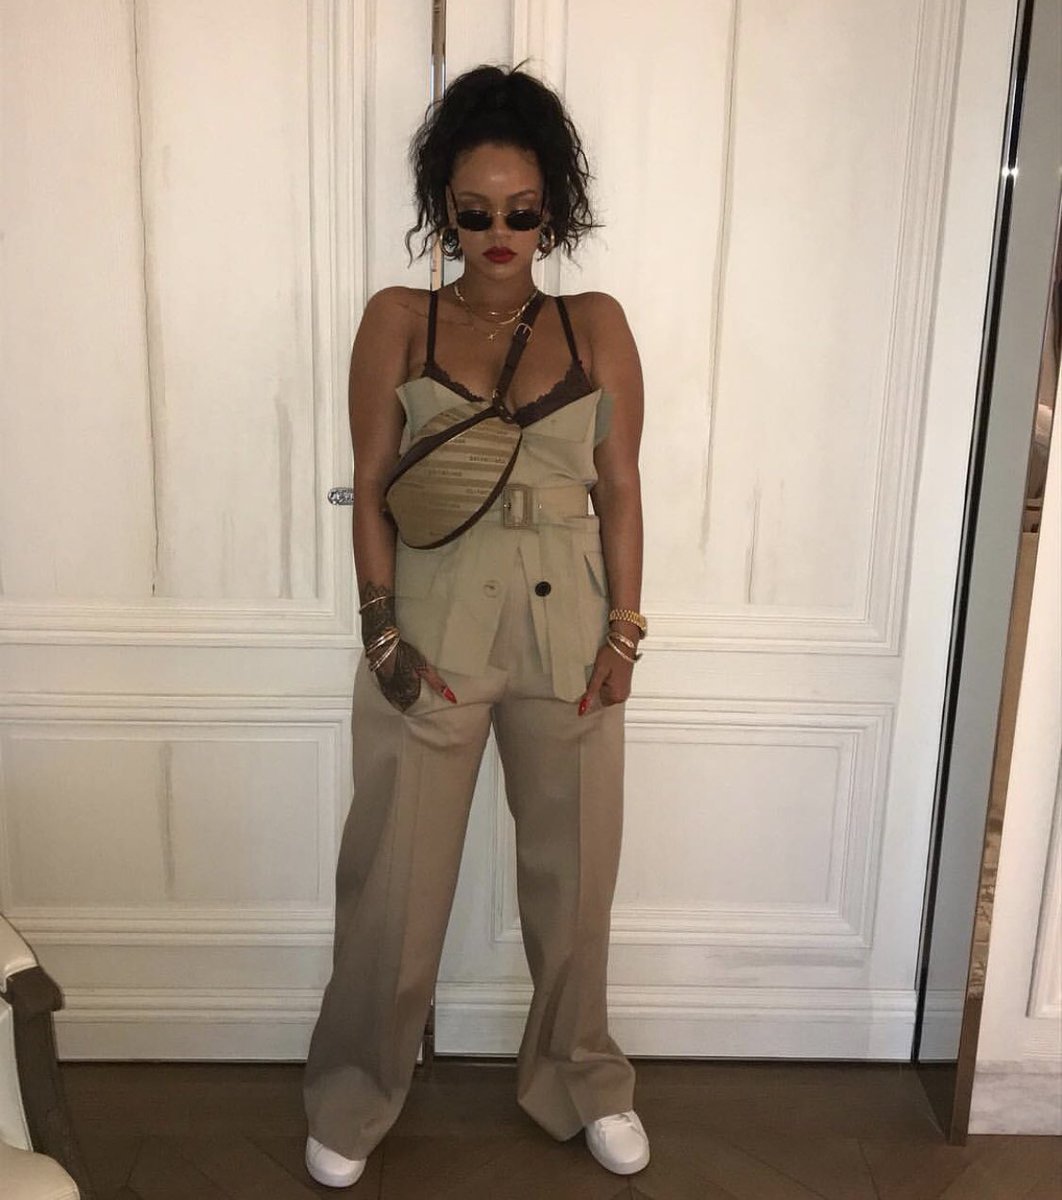 Rihanna in NYC via Instagram @badgalriri